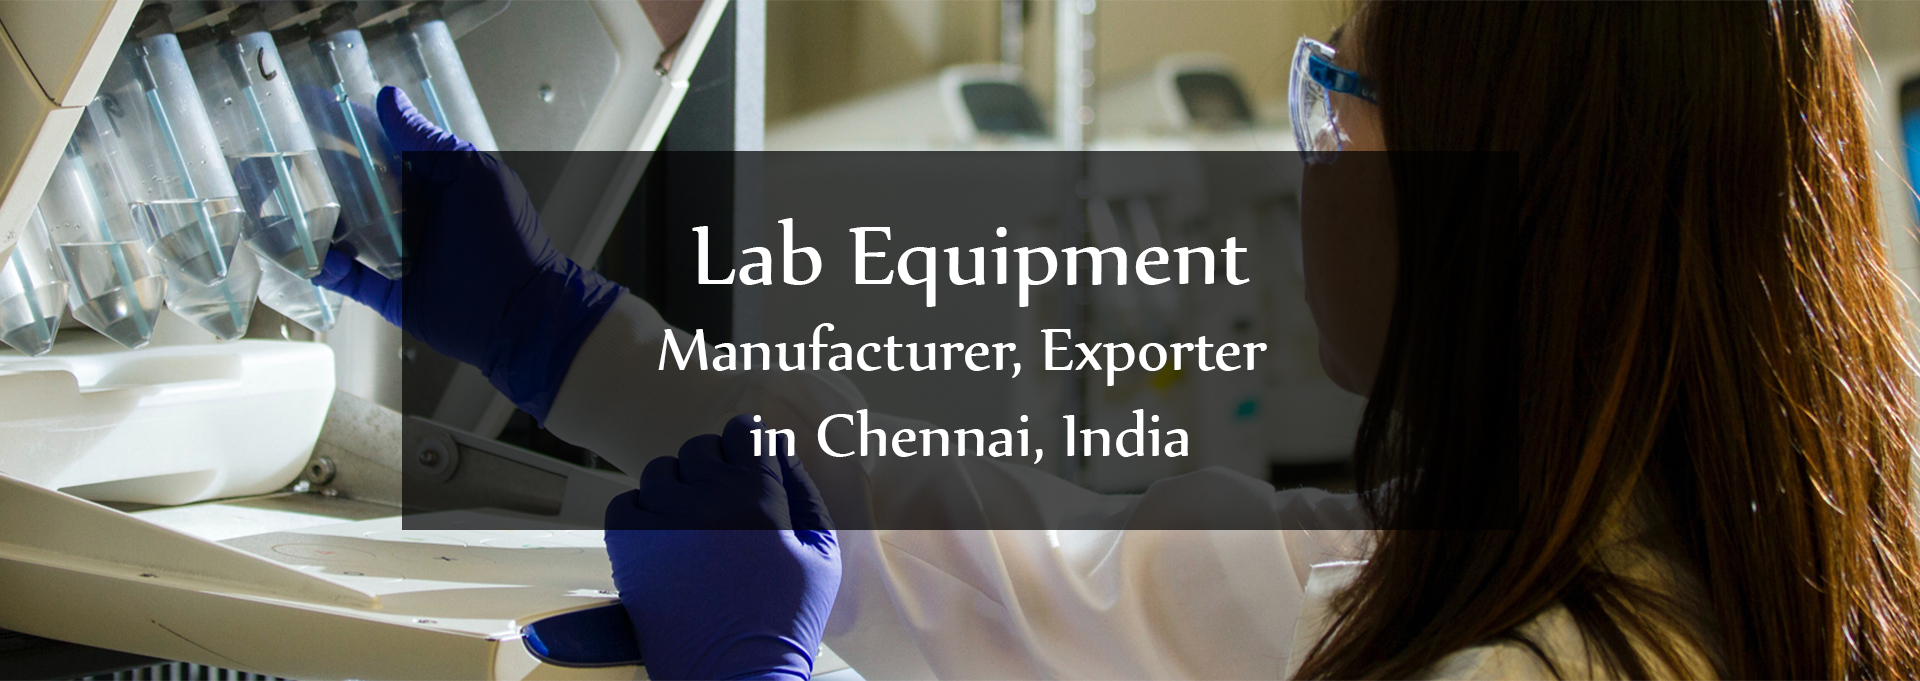 Lab Equipment Manufacturer, Exporter in Chennai, India